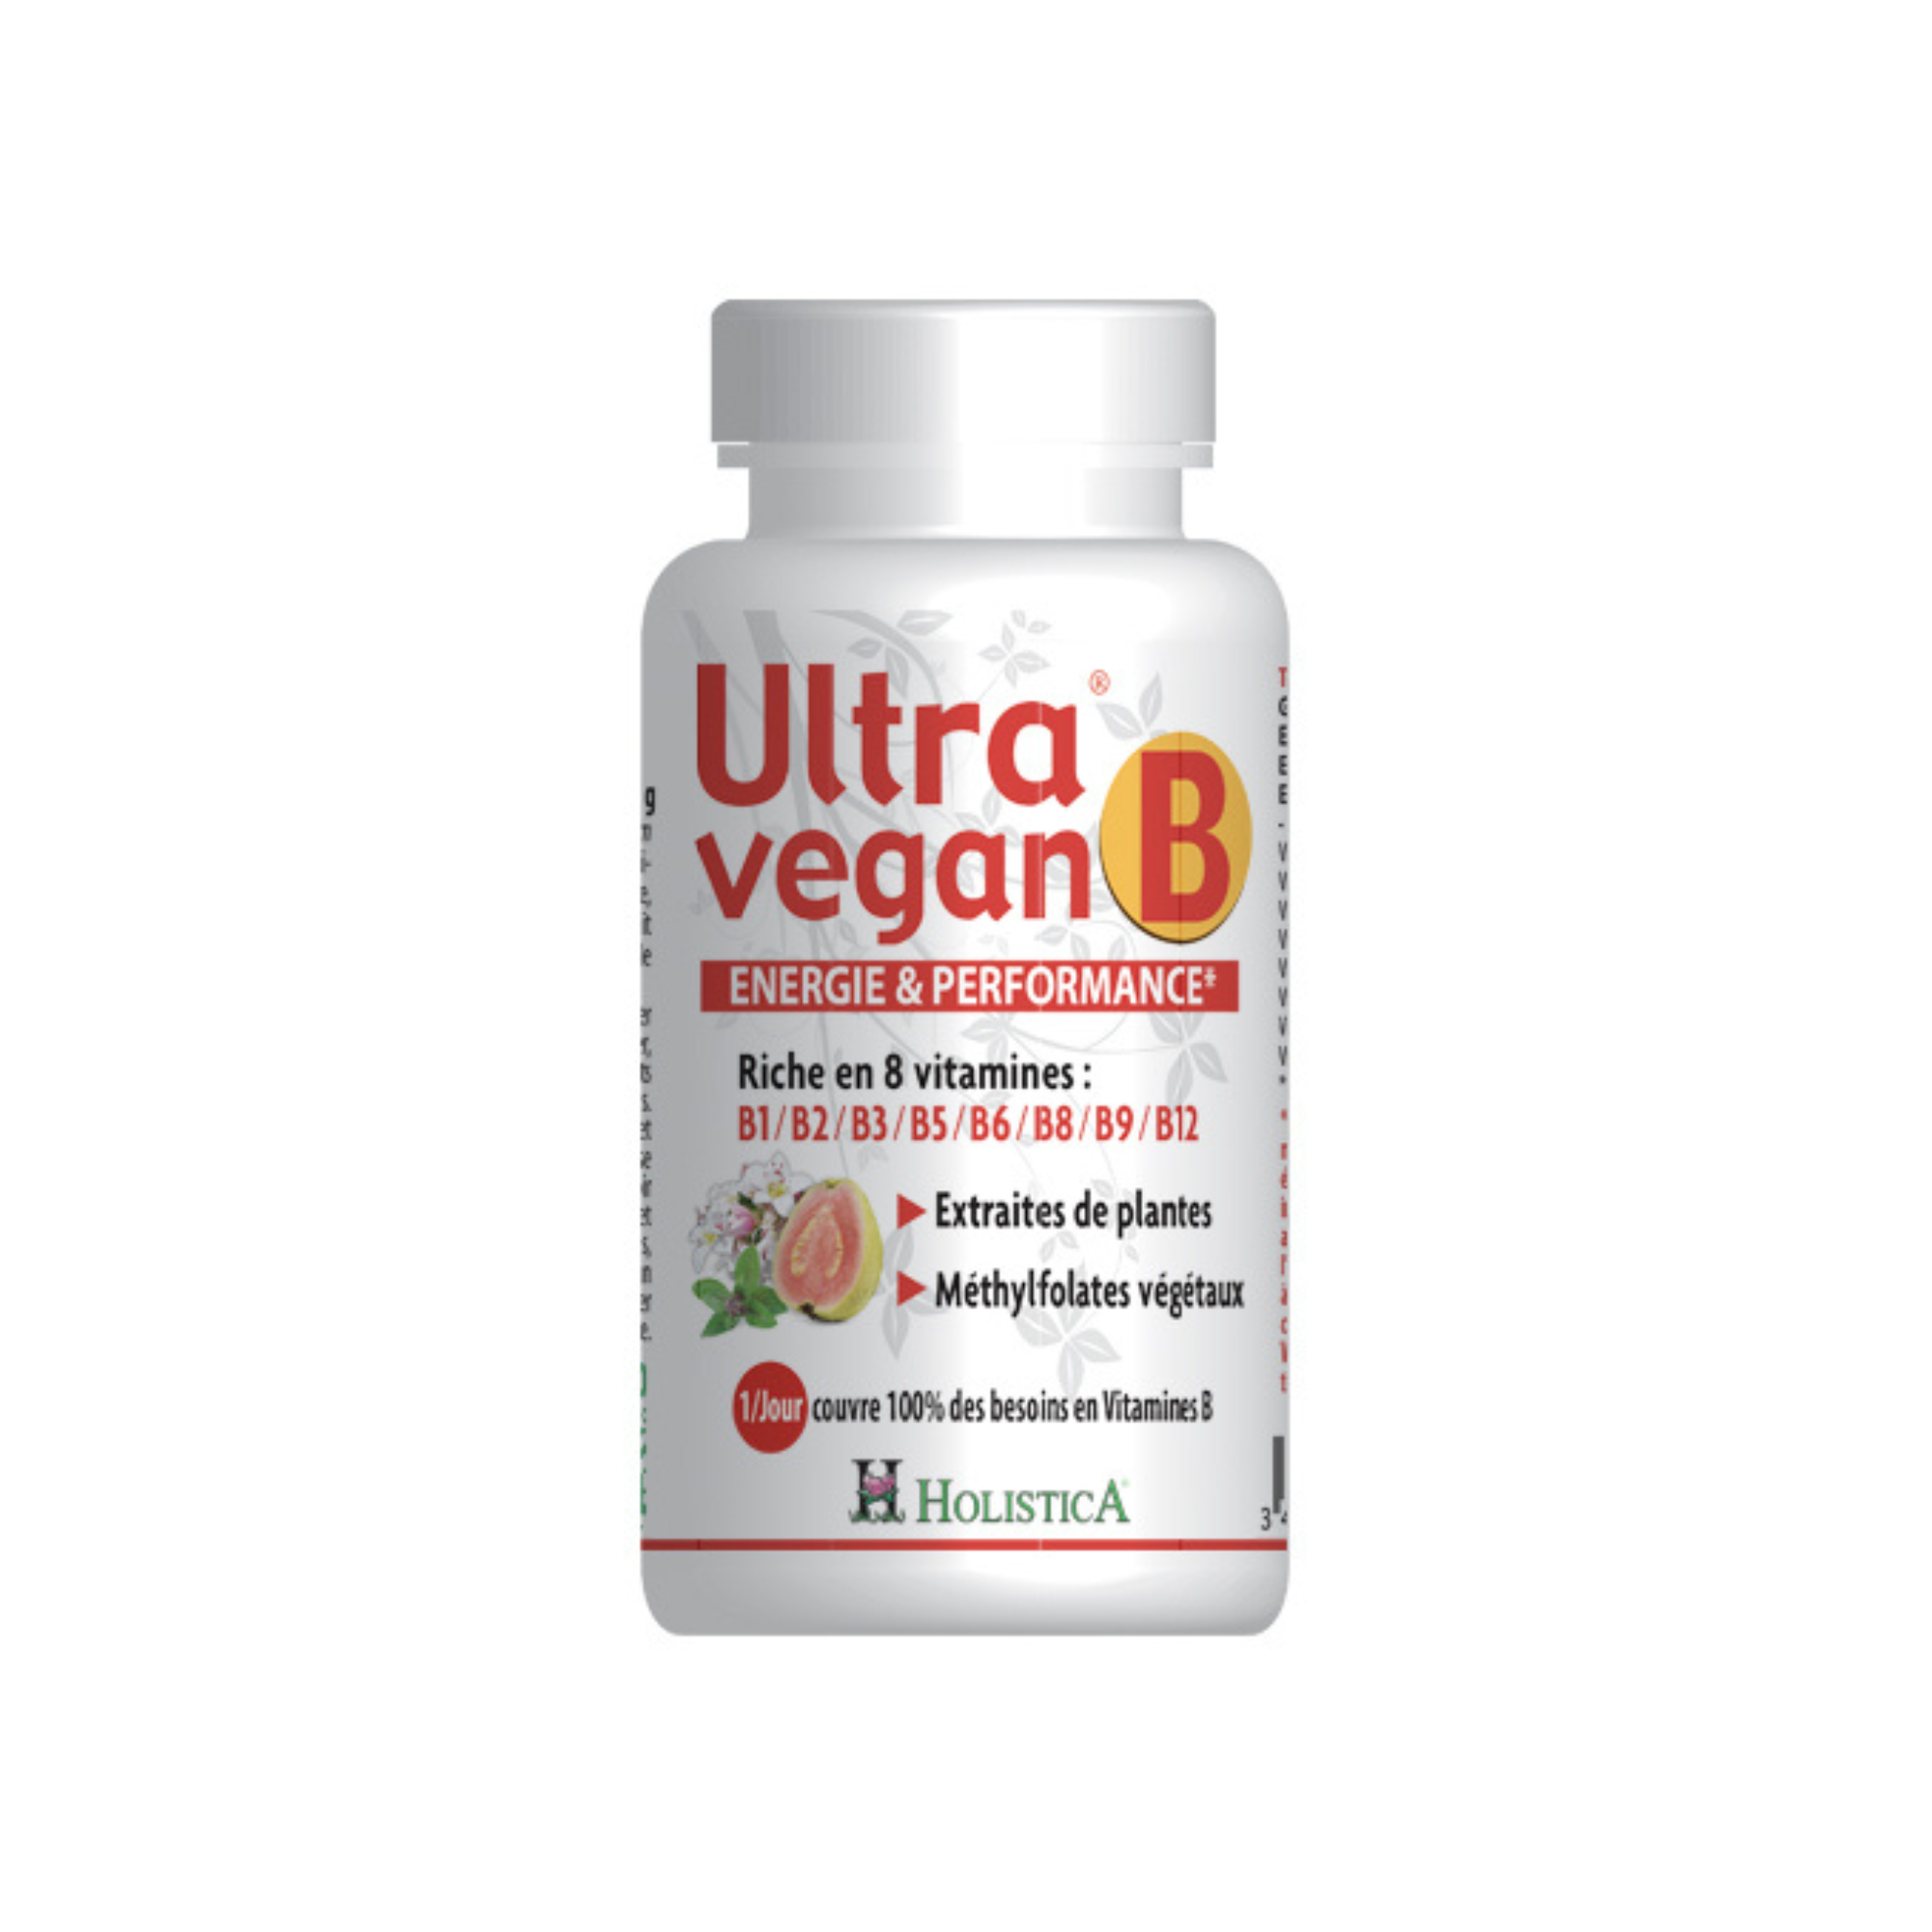 Ultra vegan b*